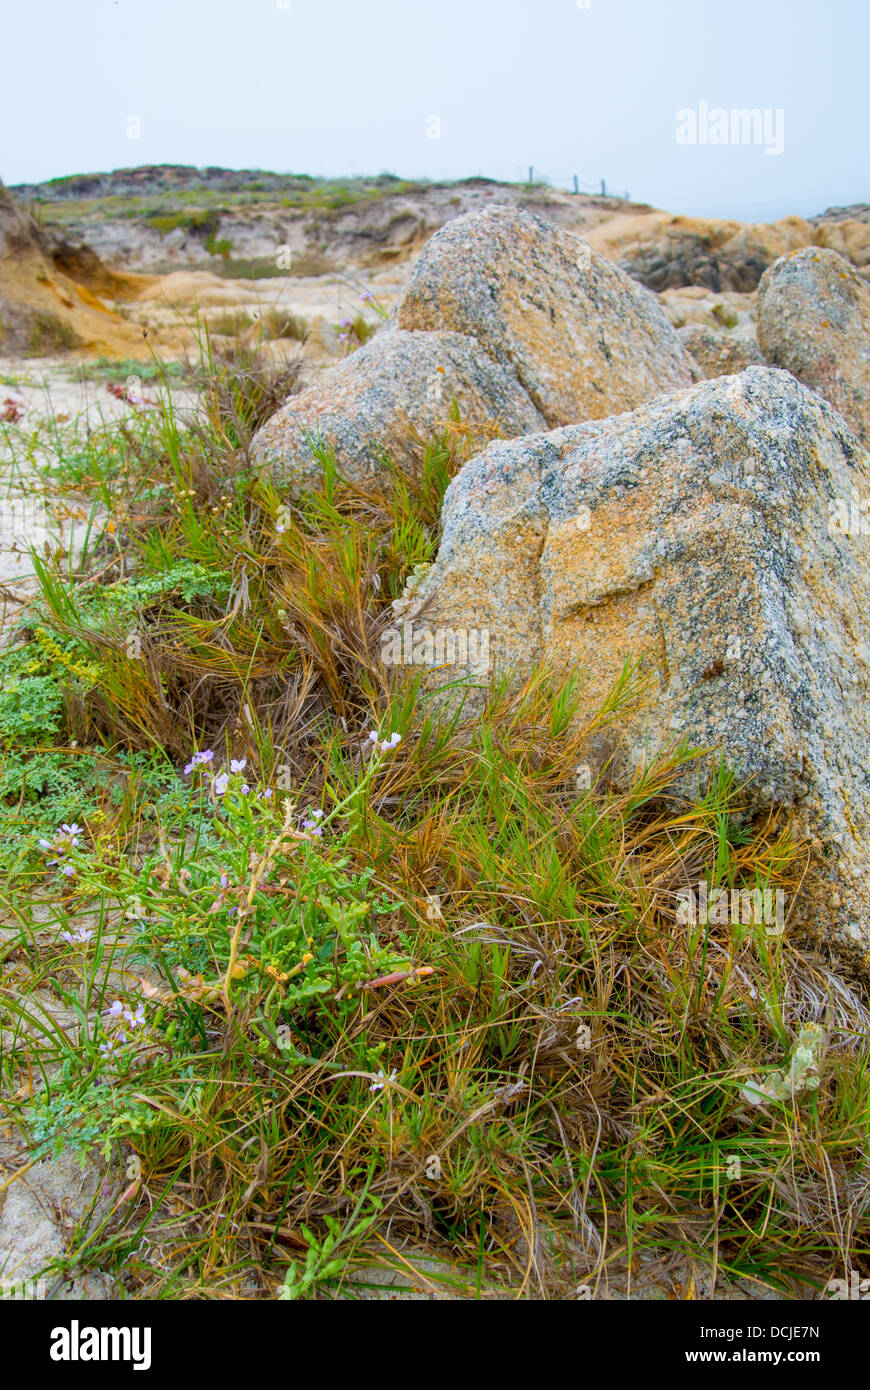 beach flora (strand) and rocks at the tidal zone, Asilomar state beach, Pacific Grove, Monterey Peninsula California Stock Photo